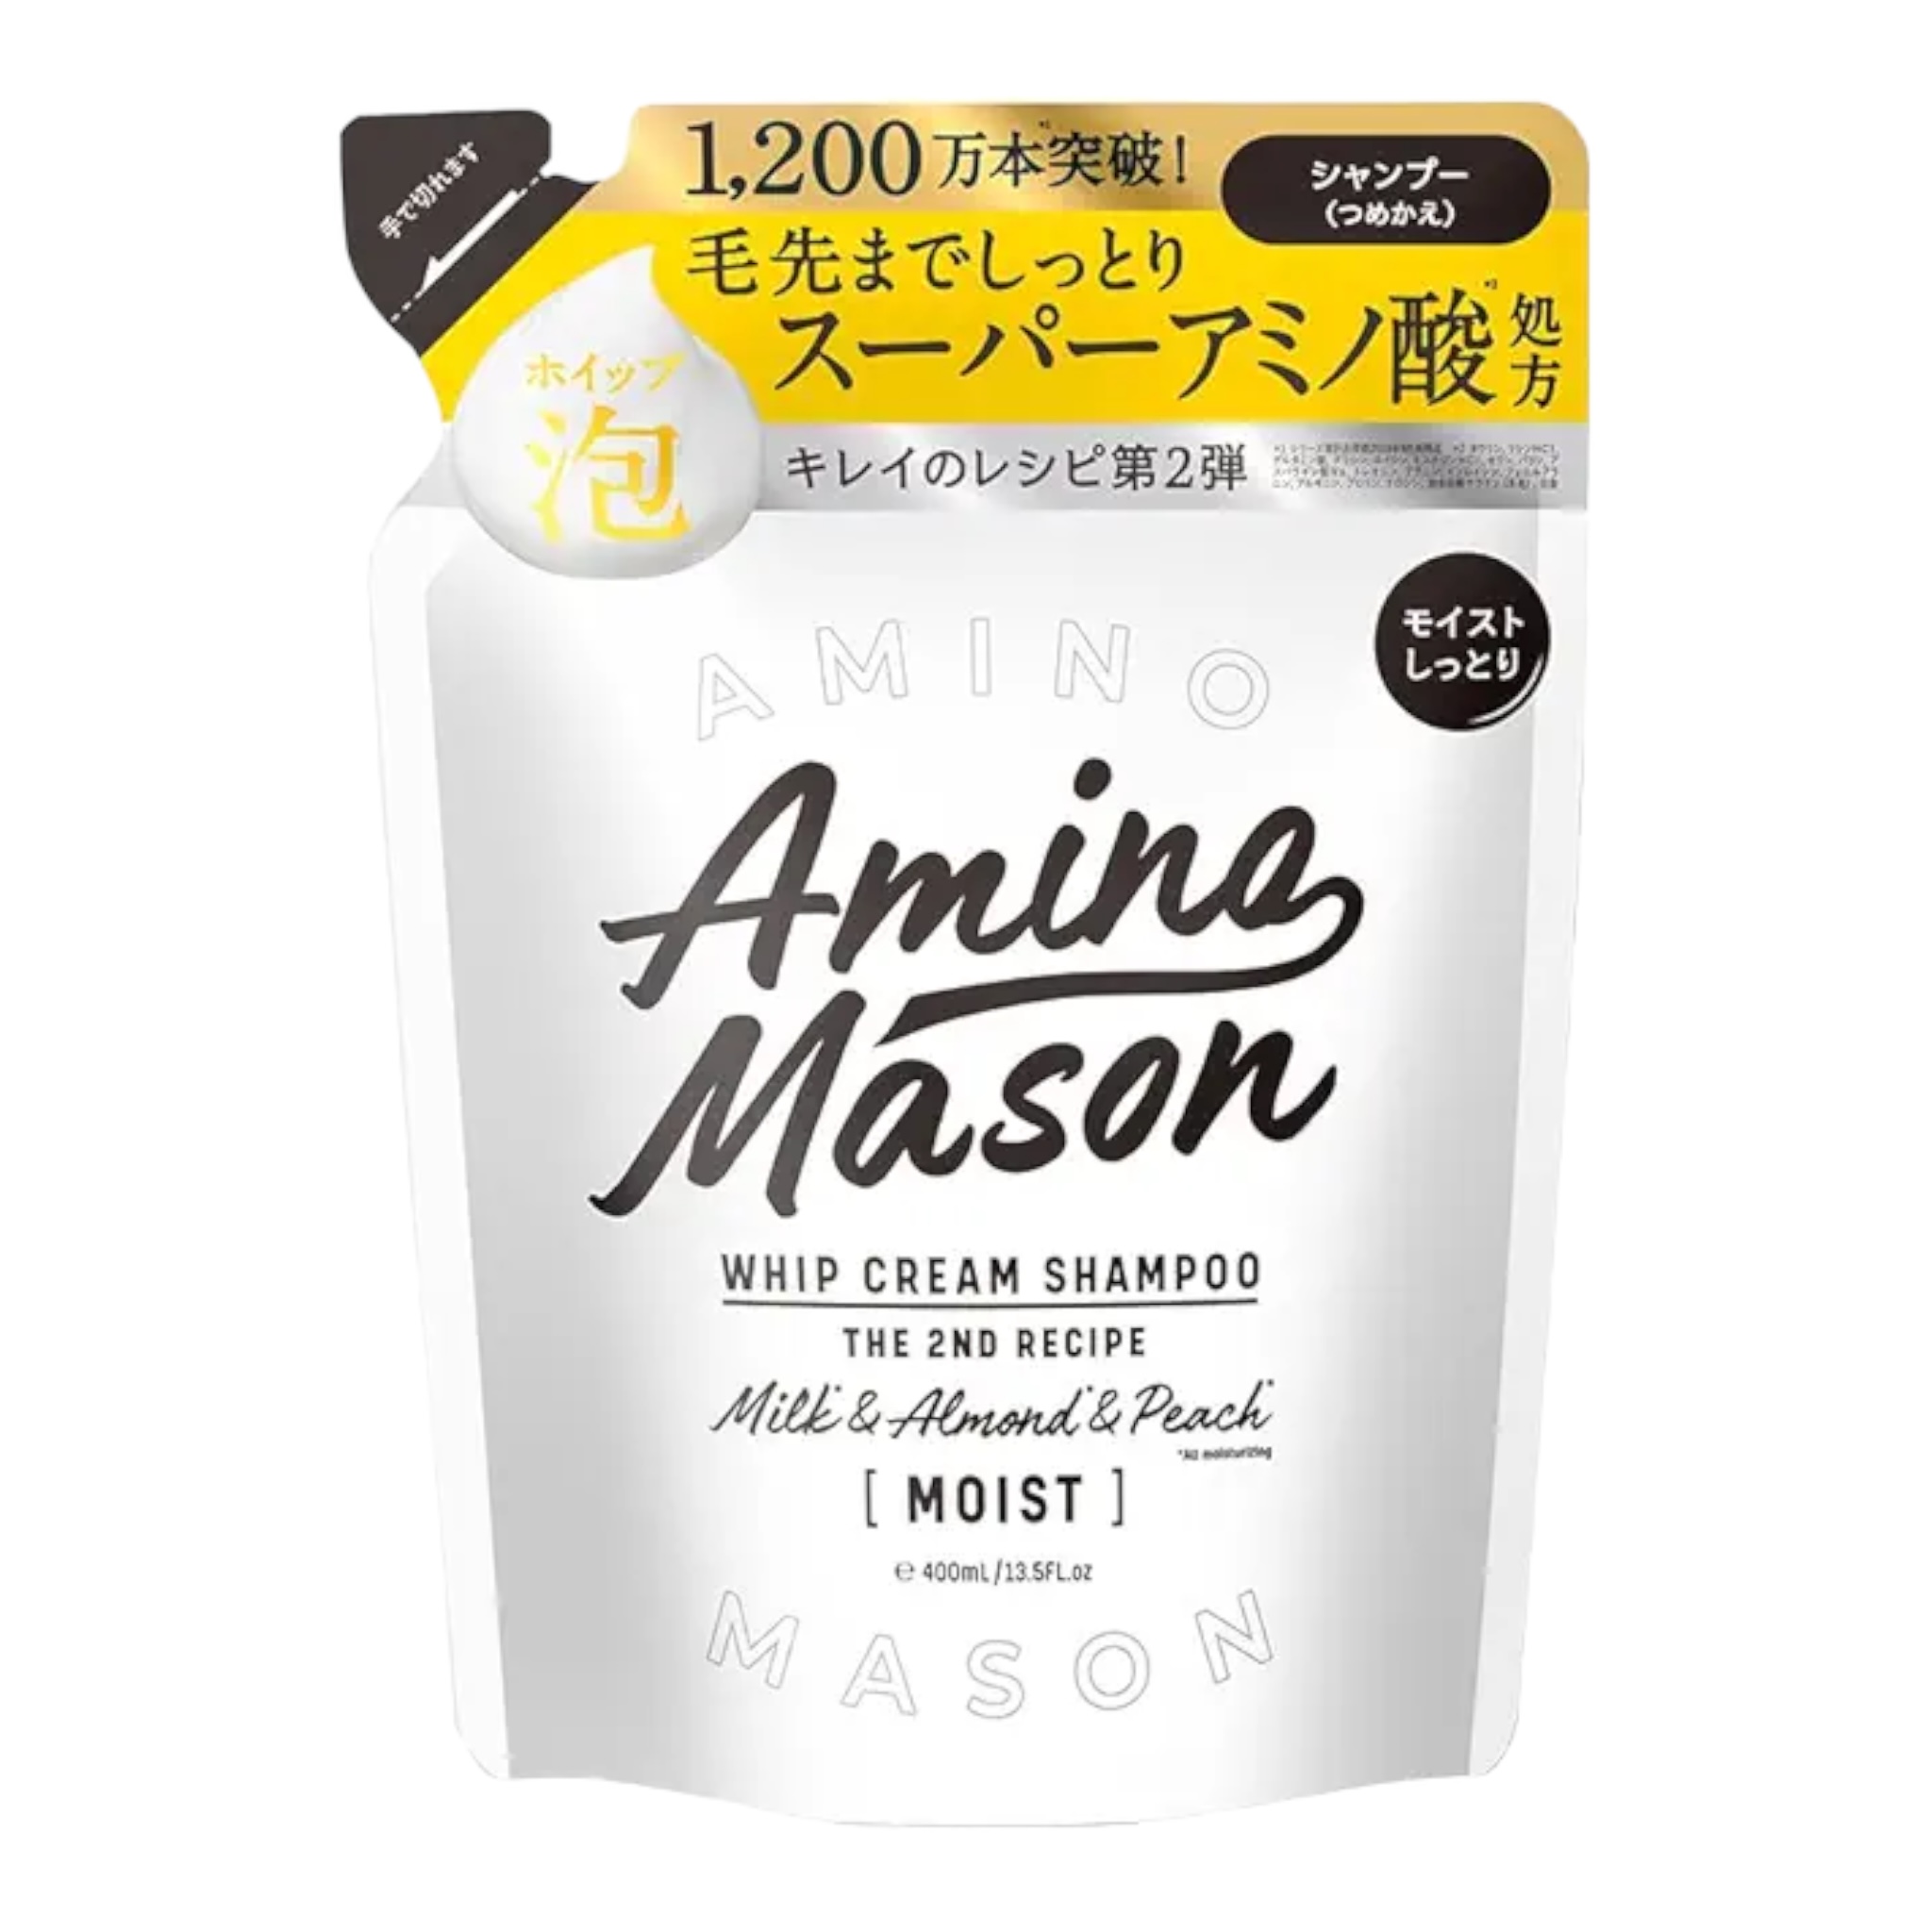 amino mason(アミノメイソン)  アミノメイソン ホイップクリーム ボディソープ モイスト ミント